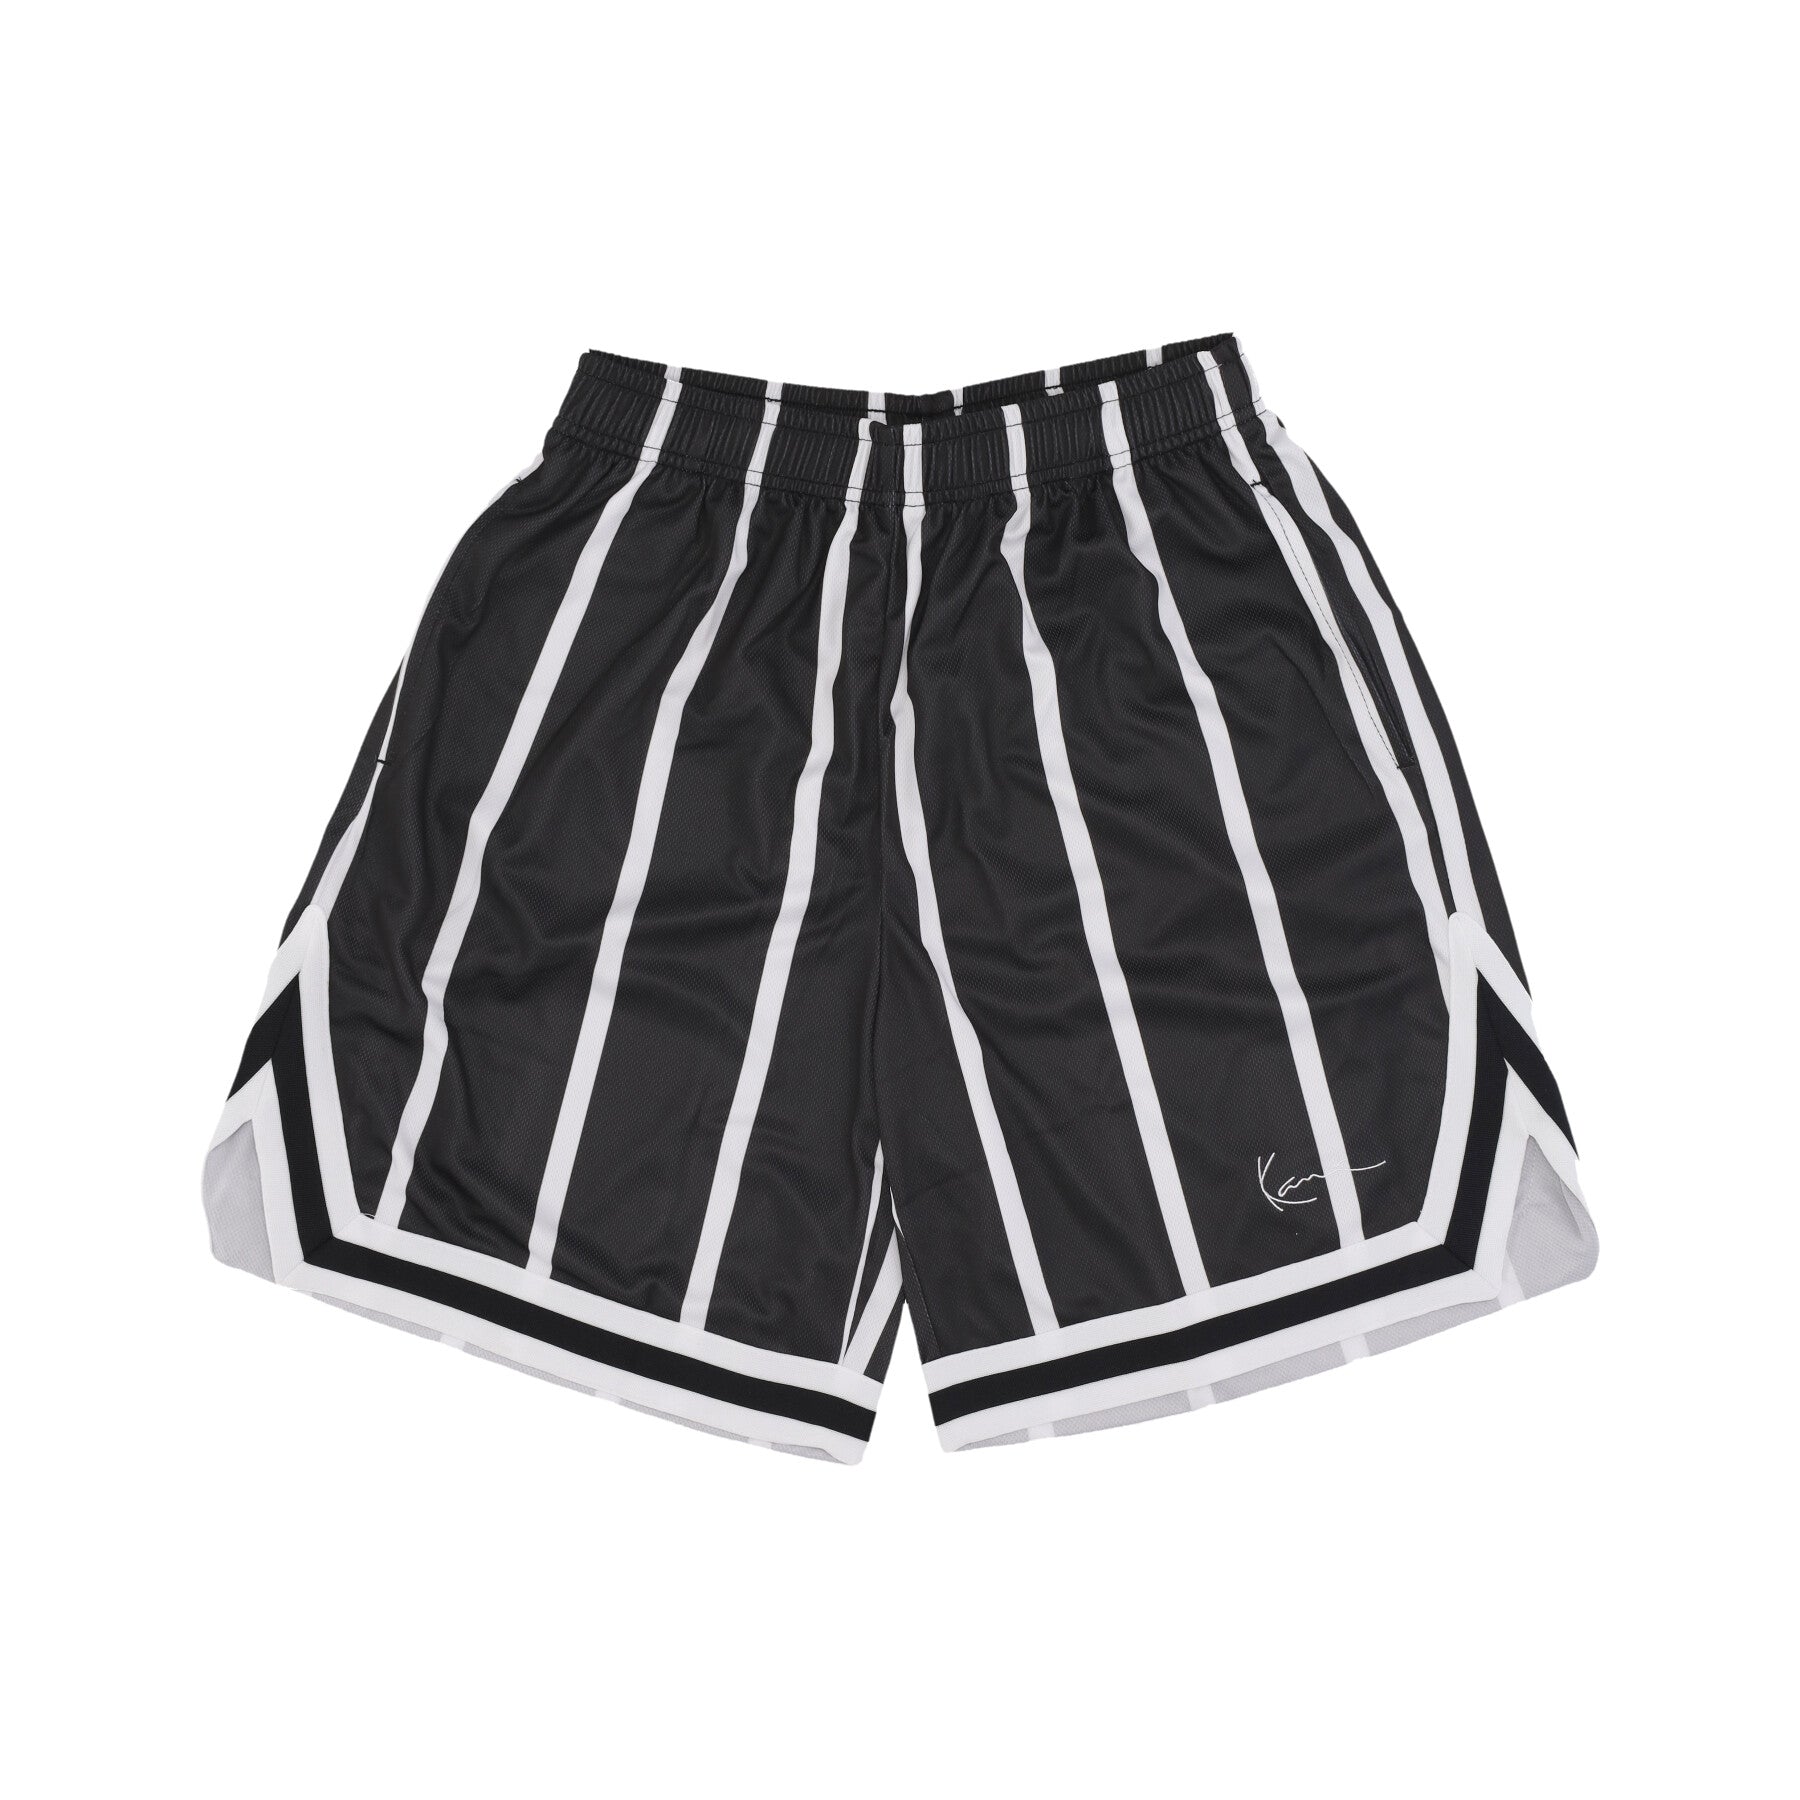 Pantaloncino Tipo Basket Uomo Striped Mesh Shorts Black/white 6013724